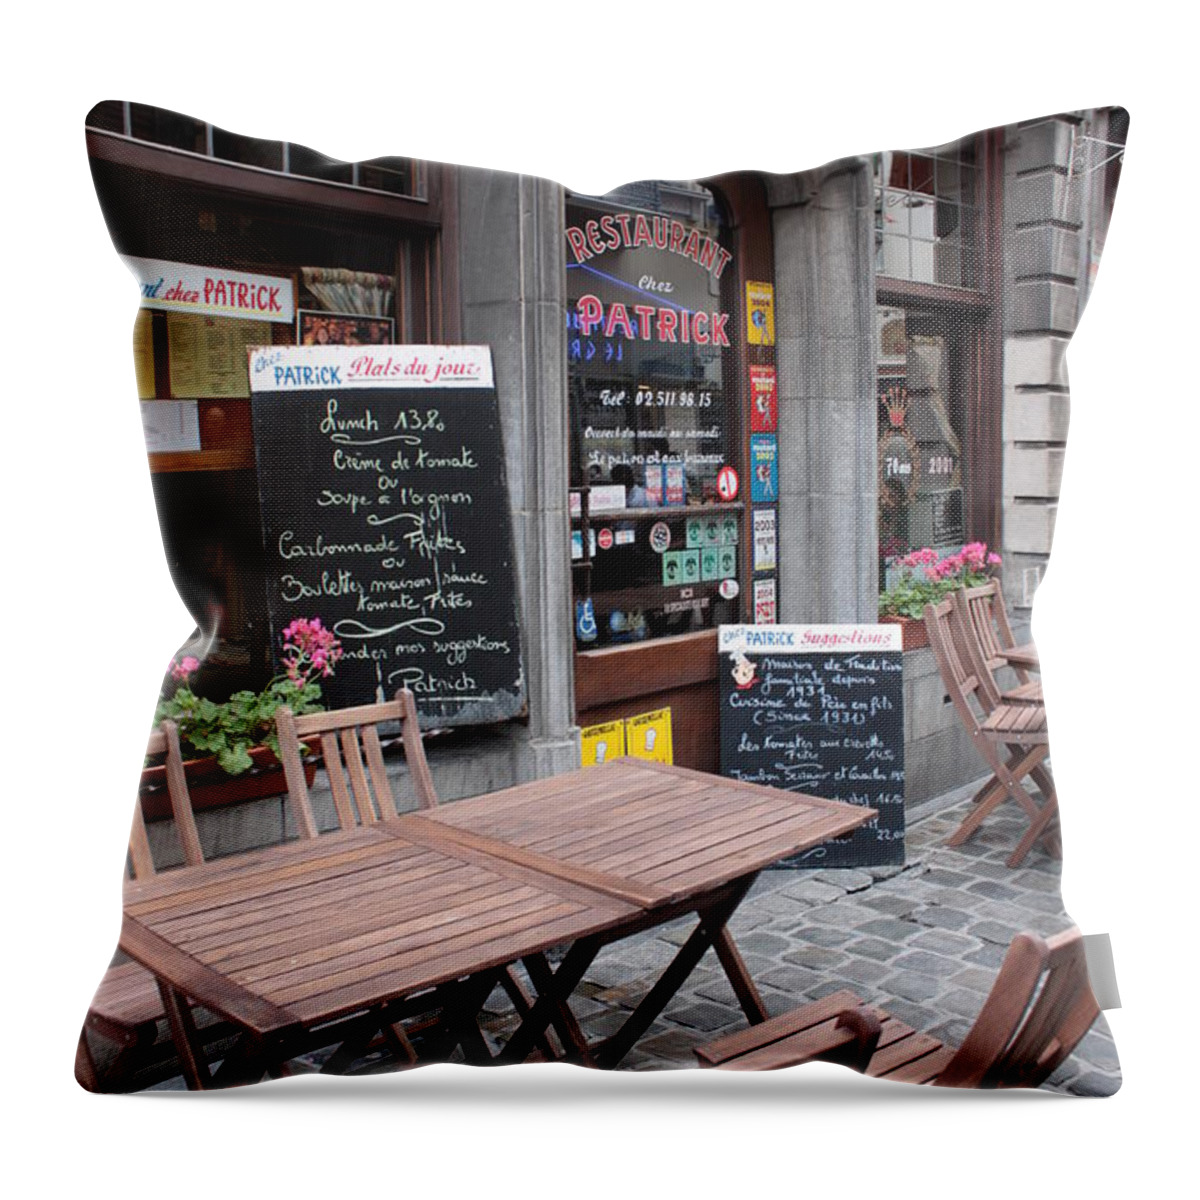 Europen Throw Pillow featuring the photograph Brussels - Restaurant Chez Patrick by Carol Groenen